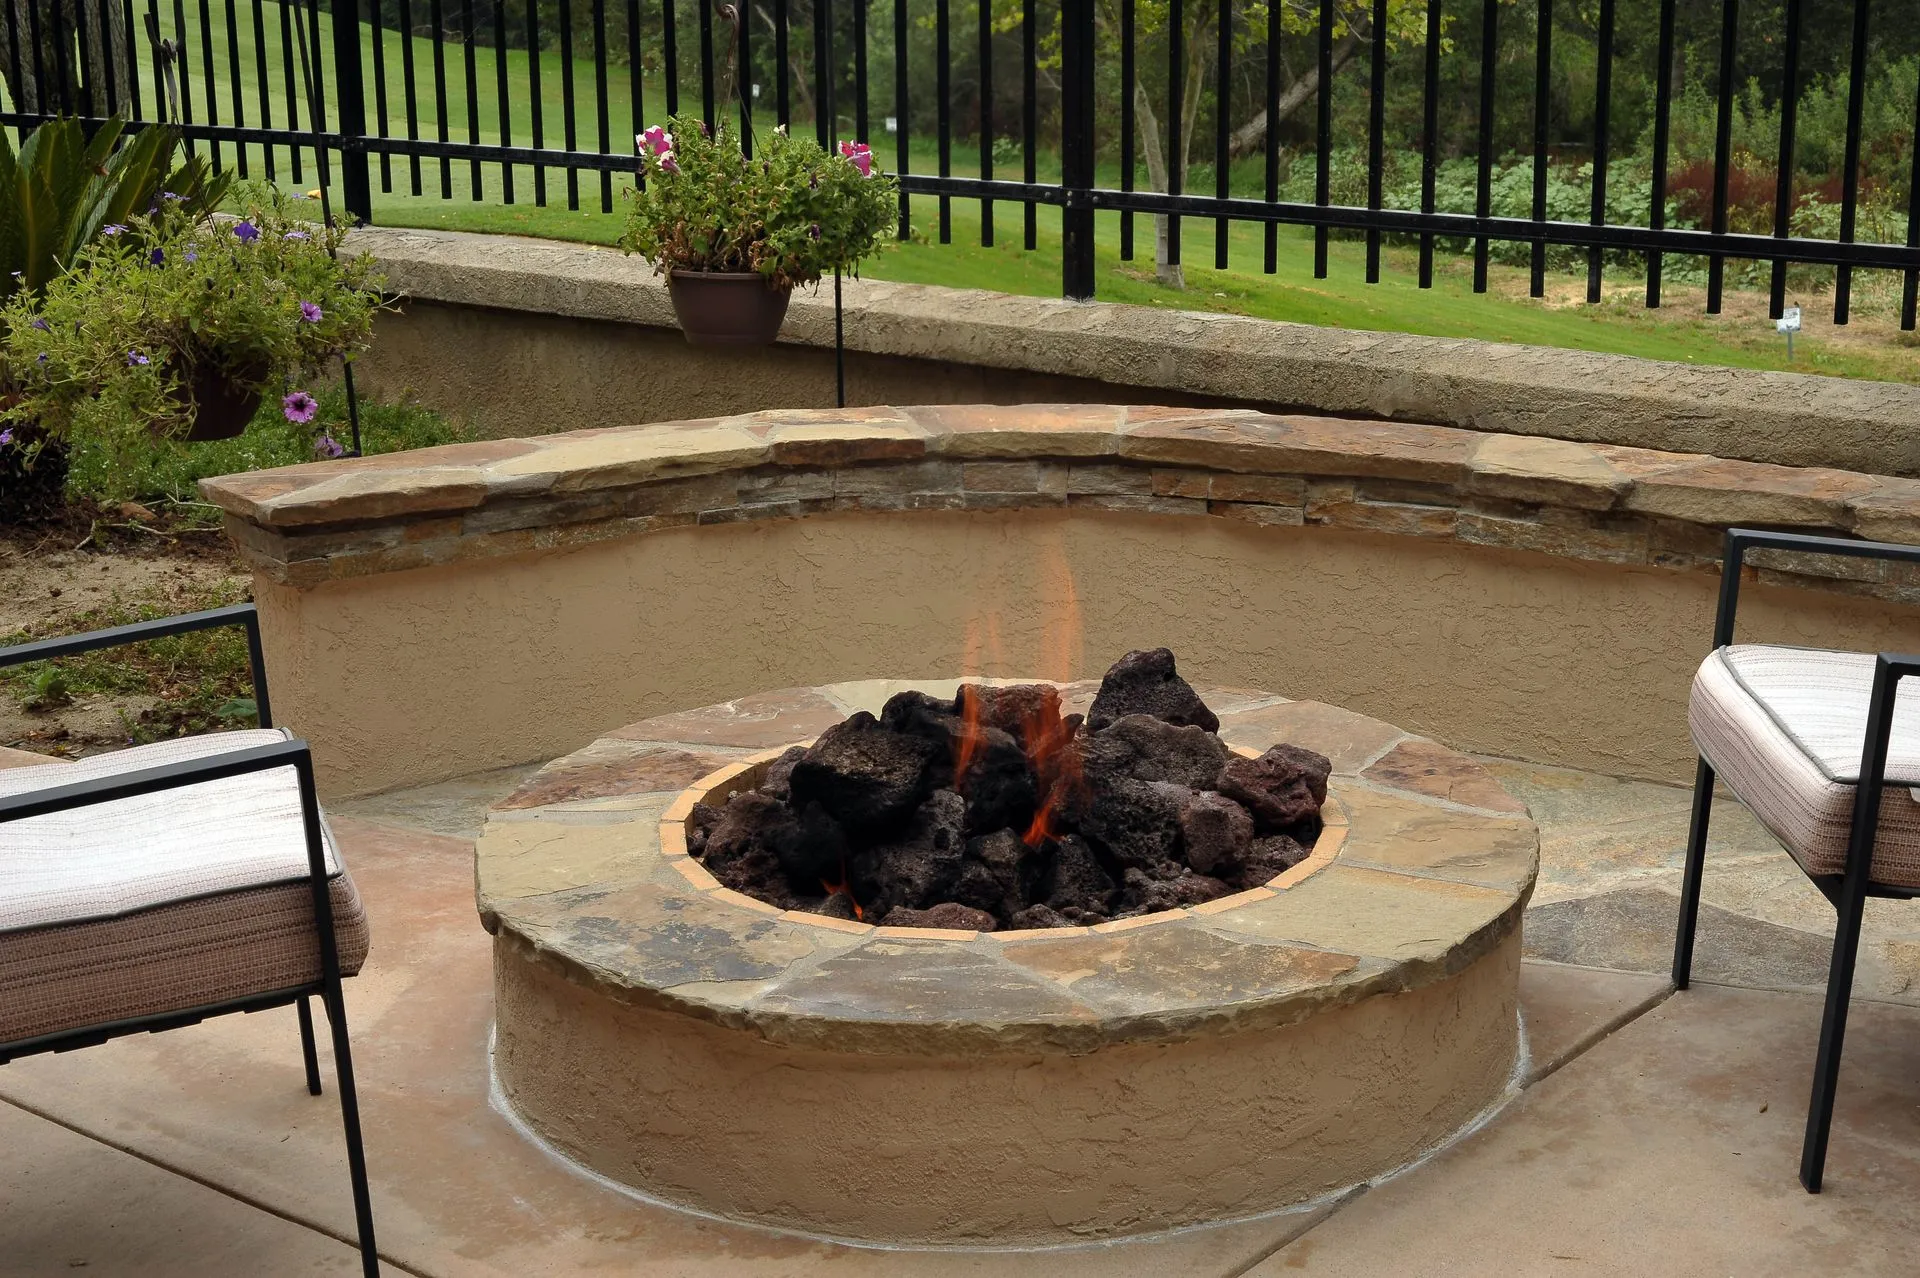 How an Outdoor Firepit Can Enhance Your Backyard